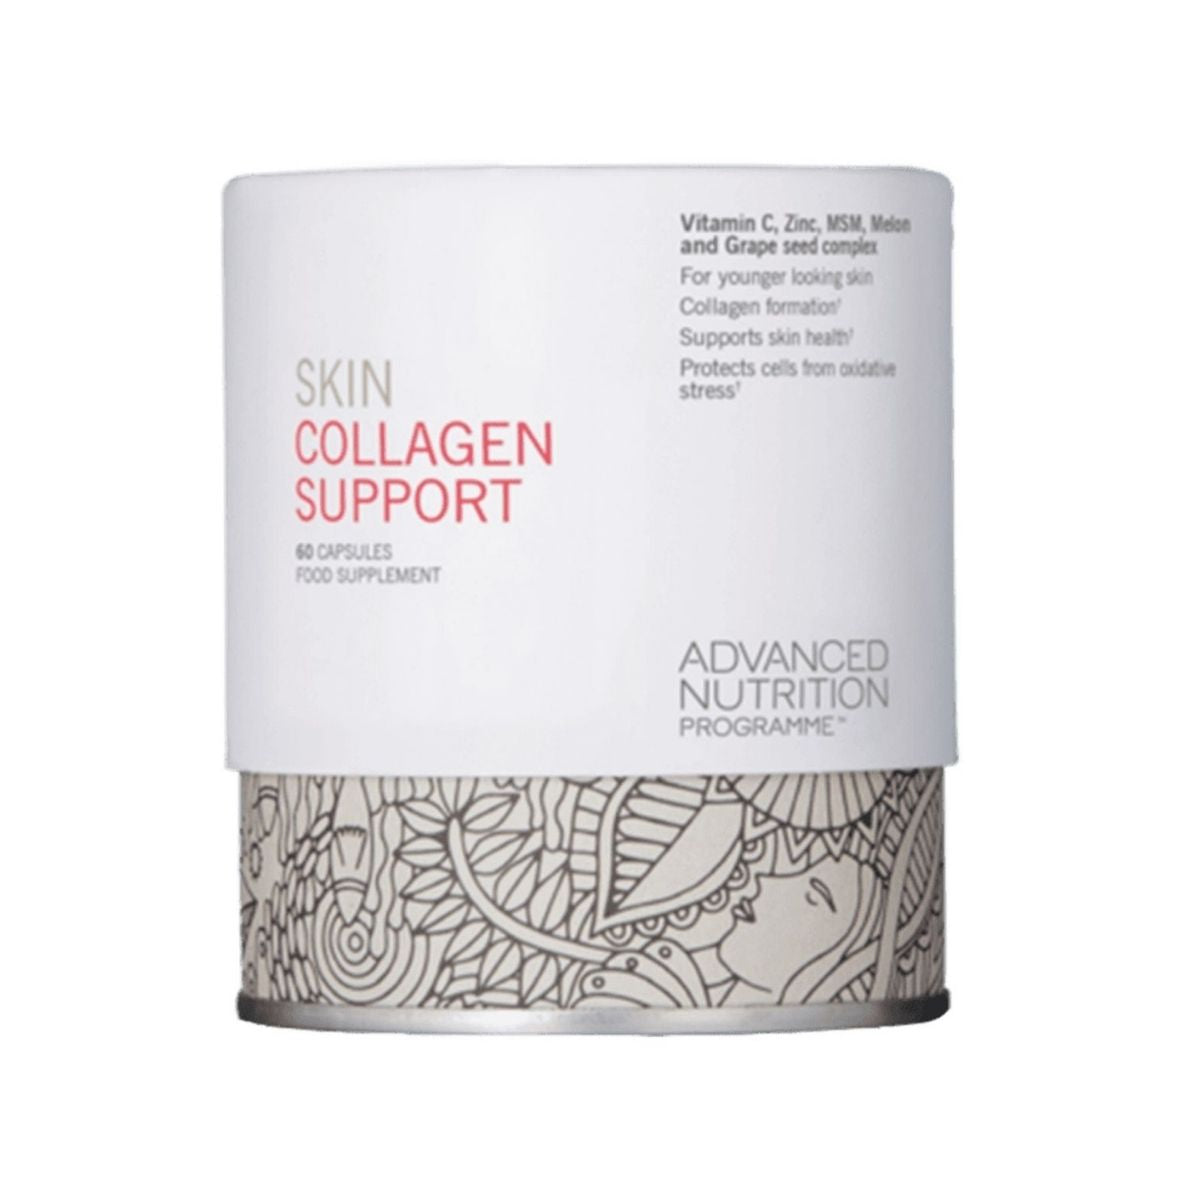 Advanced Nutrition Programme Skin Collagen Support